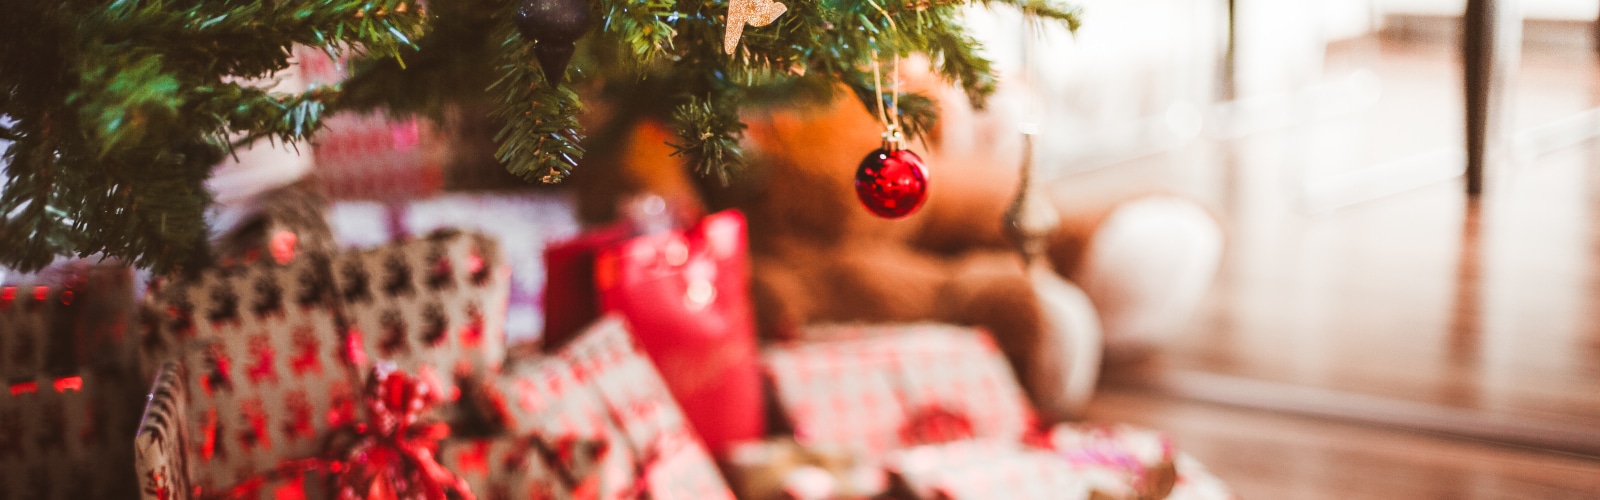 christmas-presents-under-tree-picjumbo-com